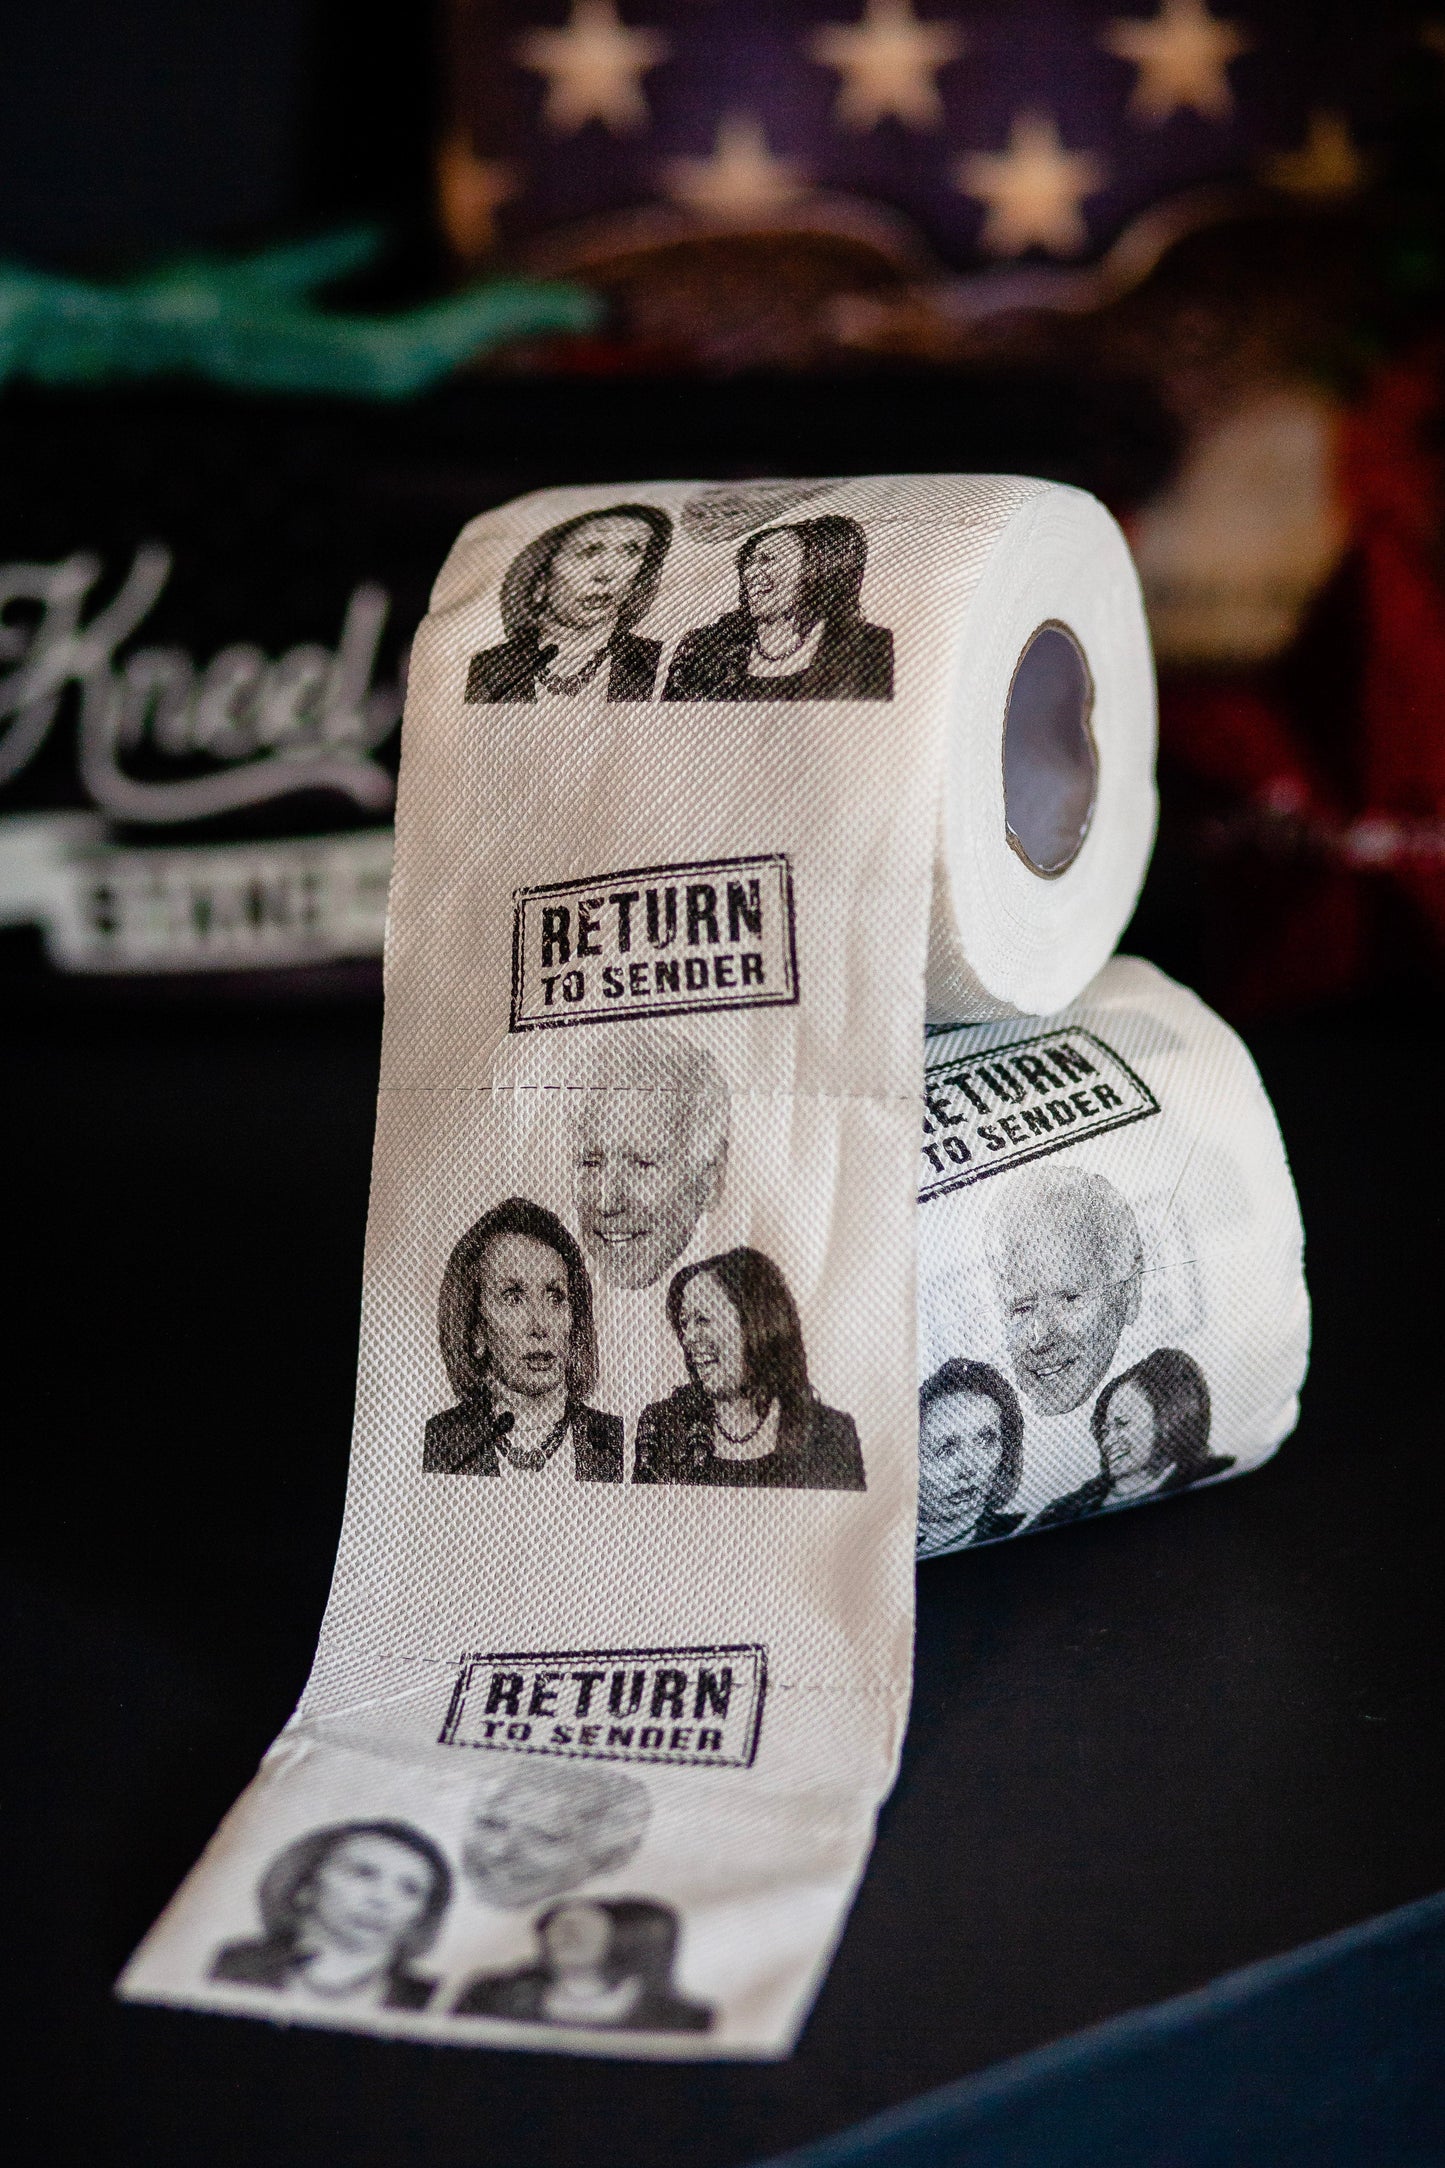 Anti-Democrat Toilet Paper Rolls | 10-Pack